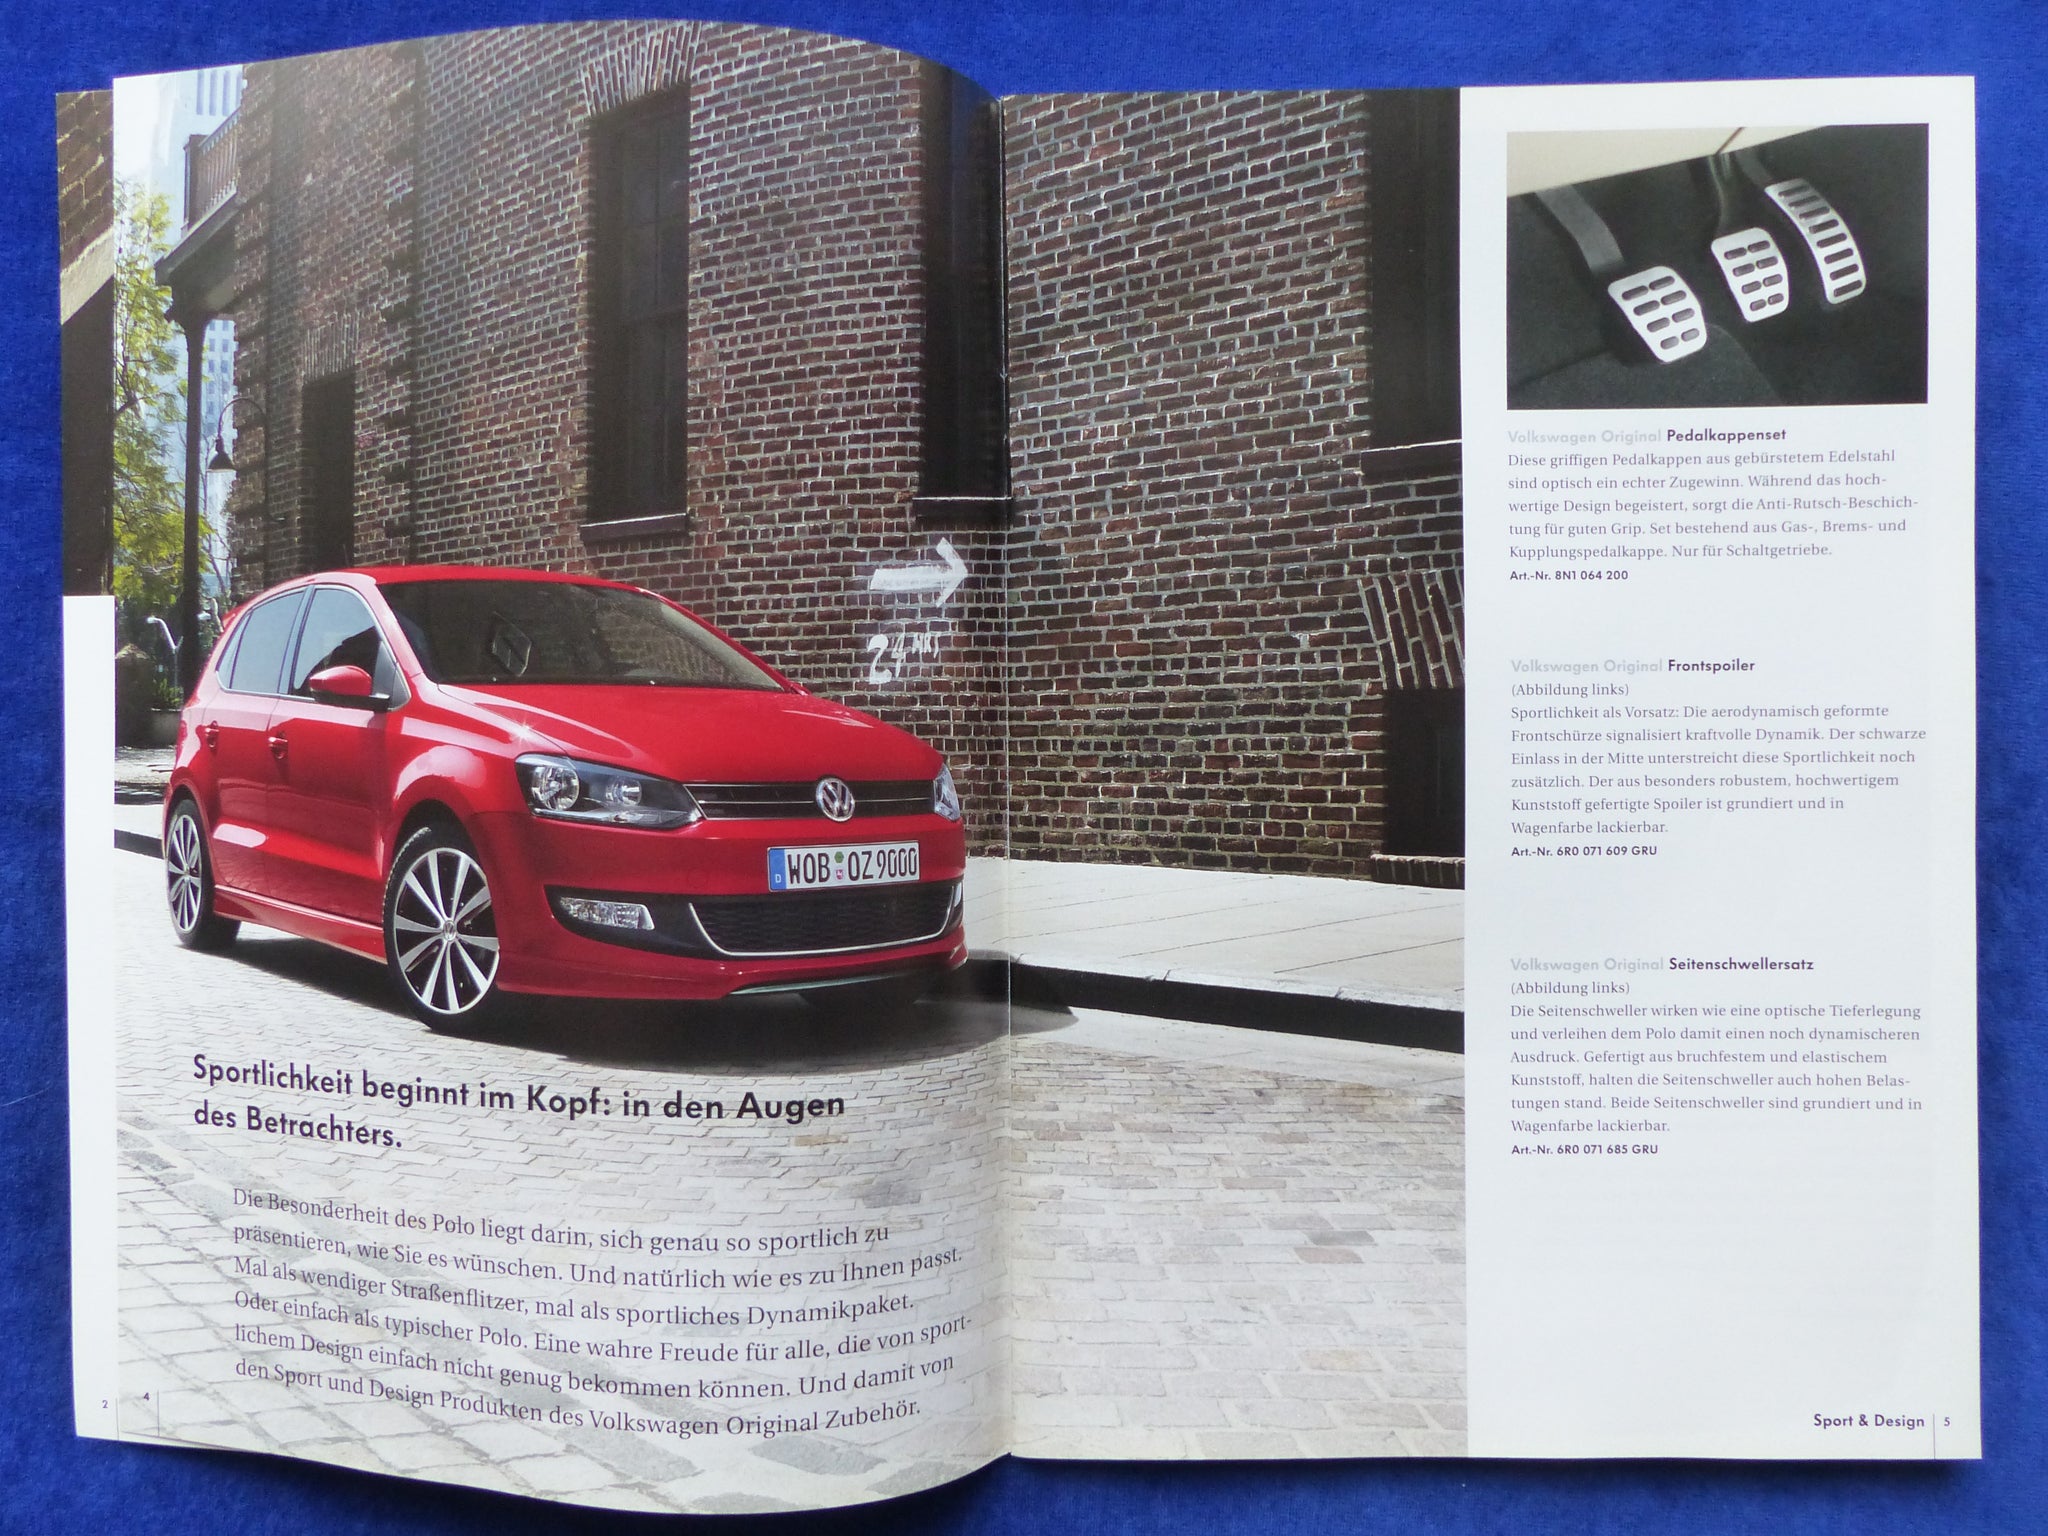 VW Polo Zubehör MJ 2011 - Prospekt Brochure + Preisliste 01.2011 –  car-brochure